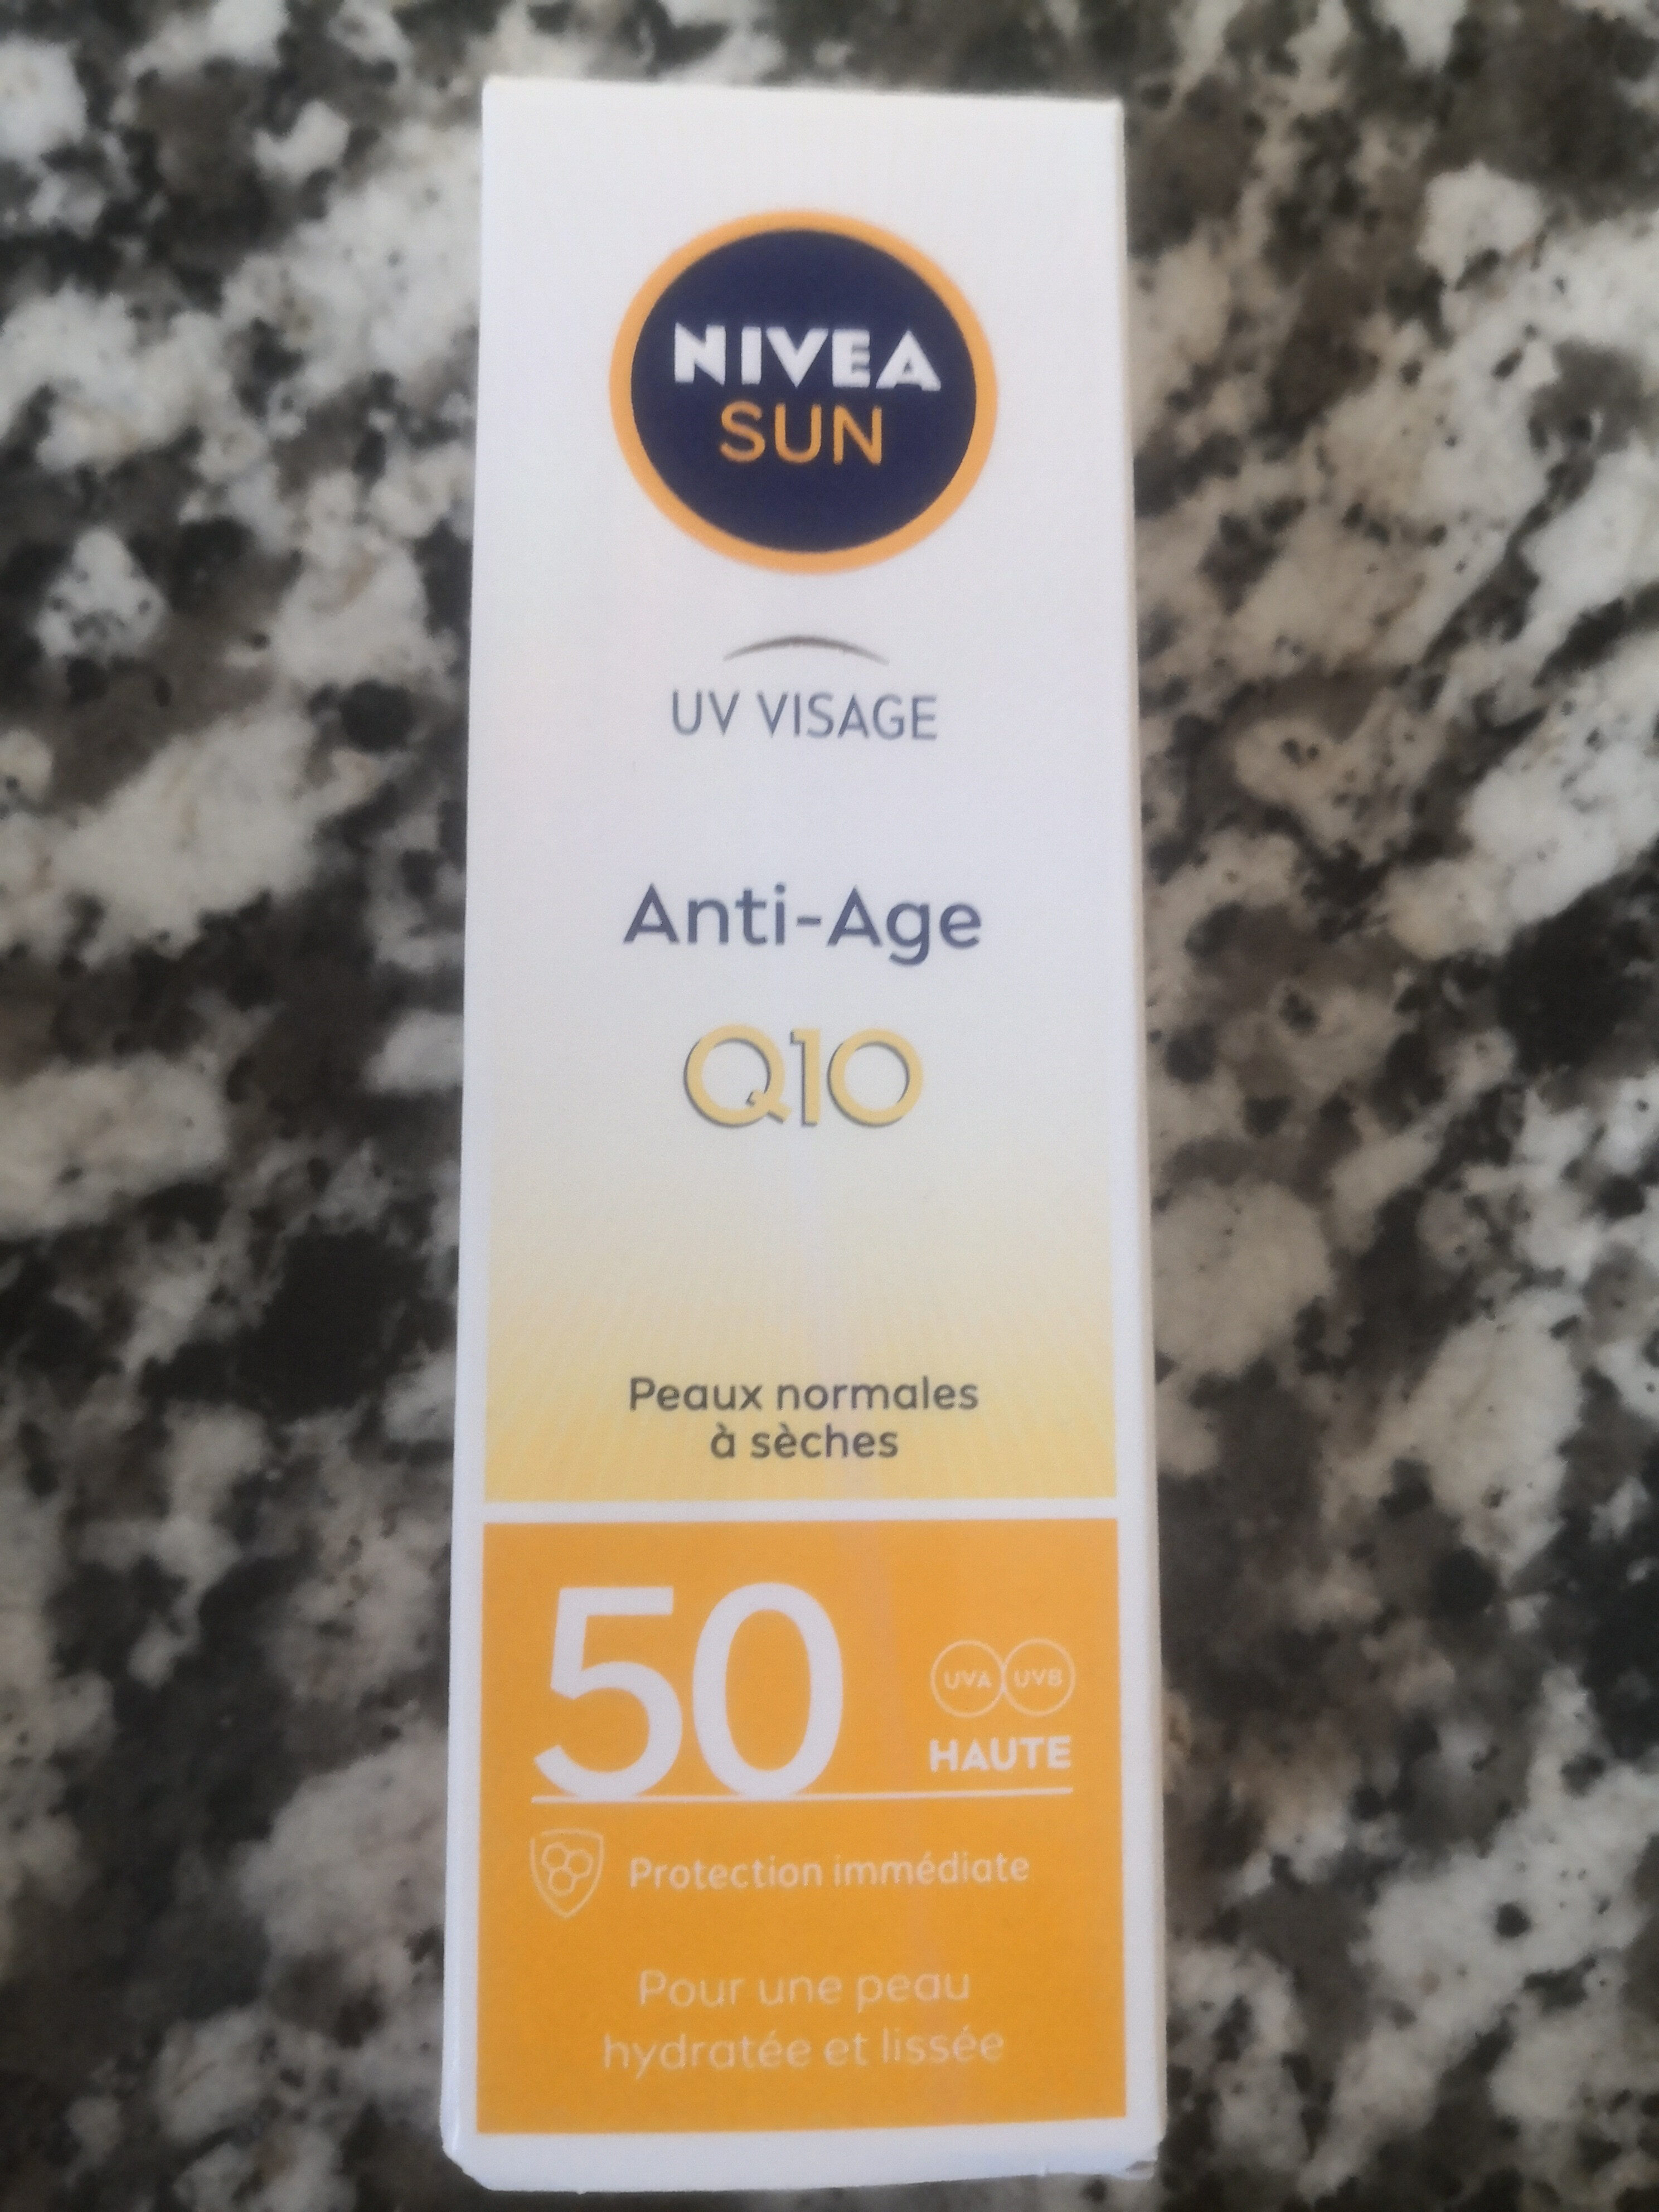 NIVEA SUN UV VISAGE anti-âge Q10 - Product - fr